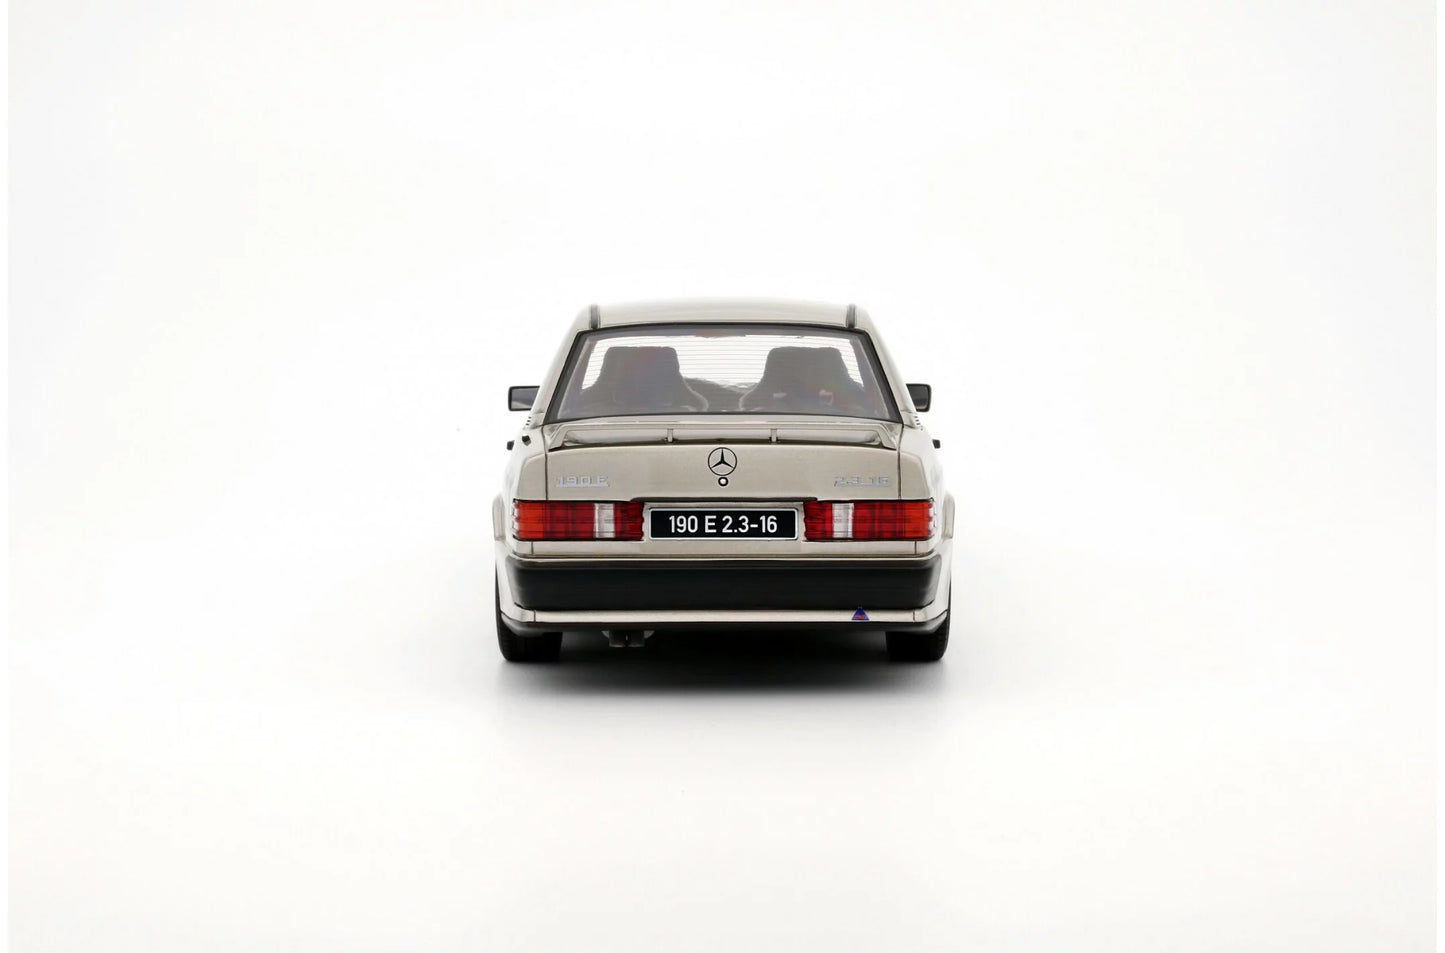 1:18 Mercedes-Benz 190E 2.3 16V, 1984, Silver Smoke Metallic, Senna edition, Ottomobile OT1041, lukket model, limited 2.000 stk.